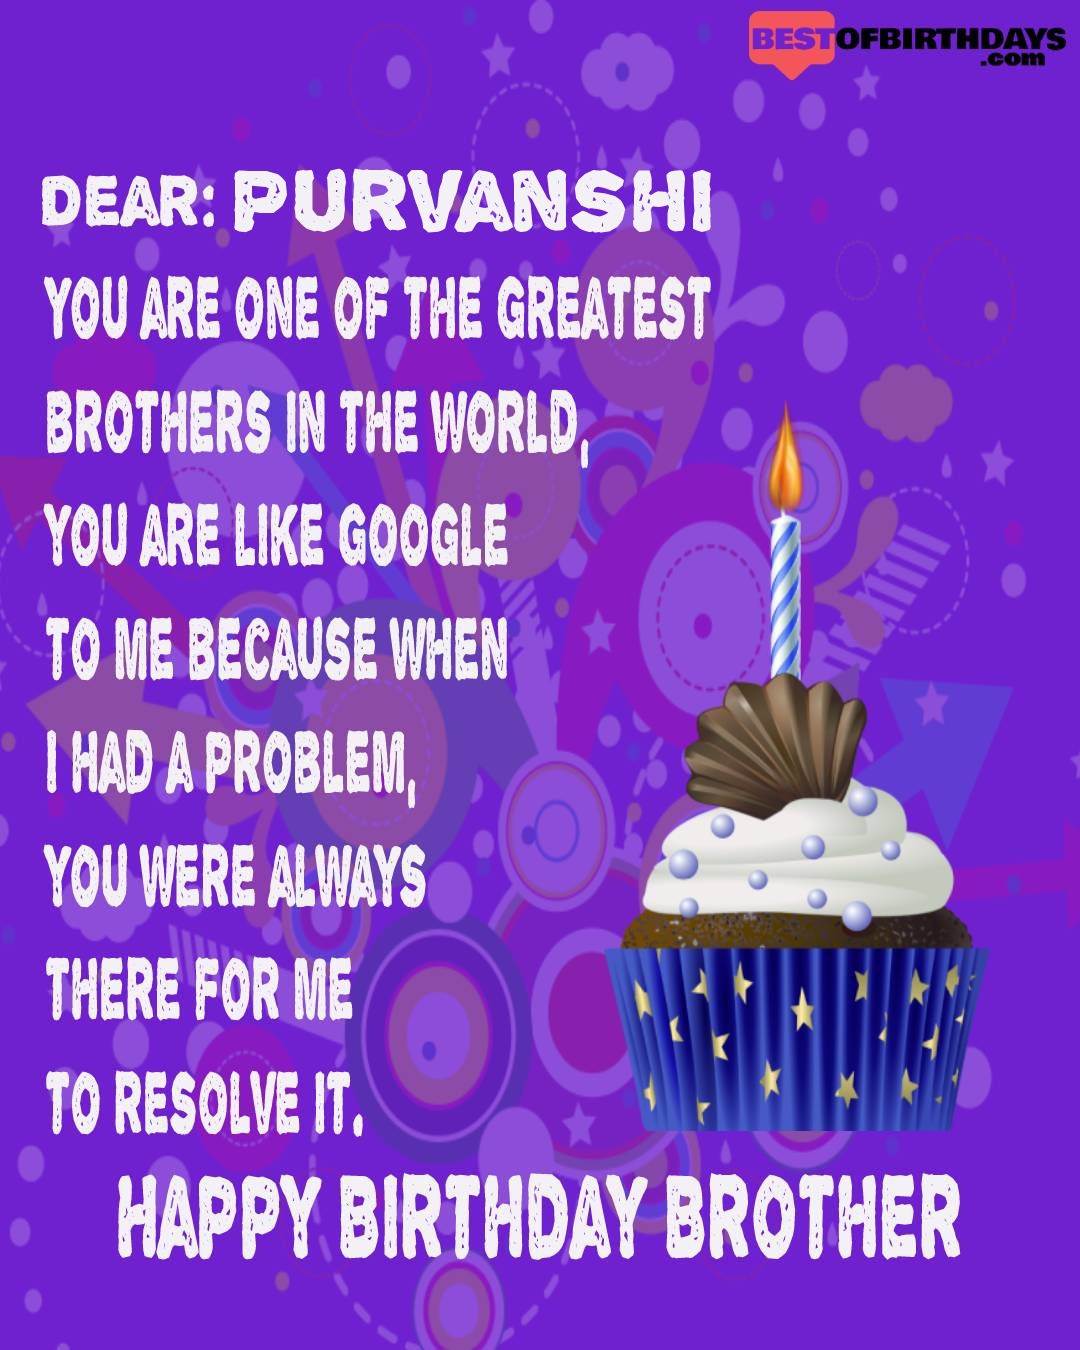 Happy birthday purvanshi bhai brother bro